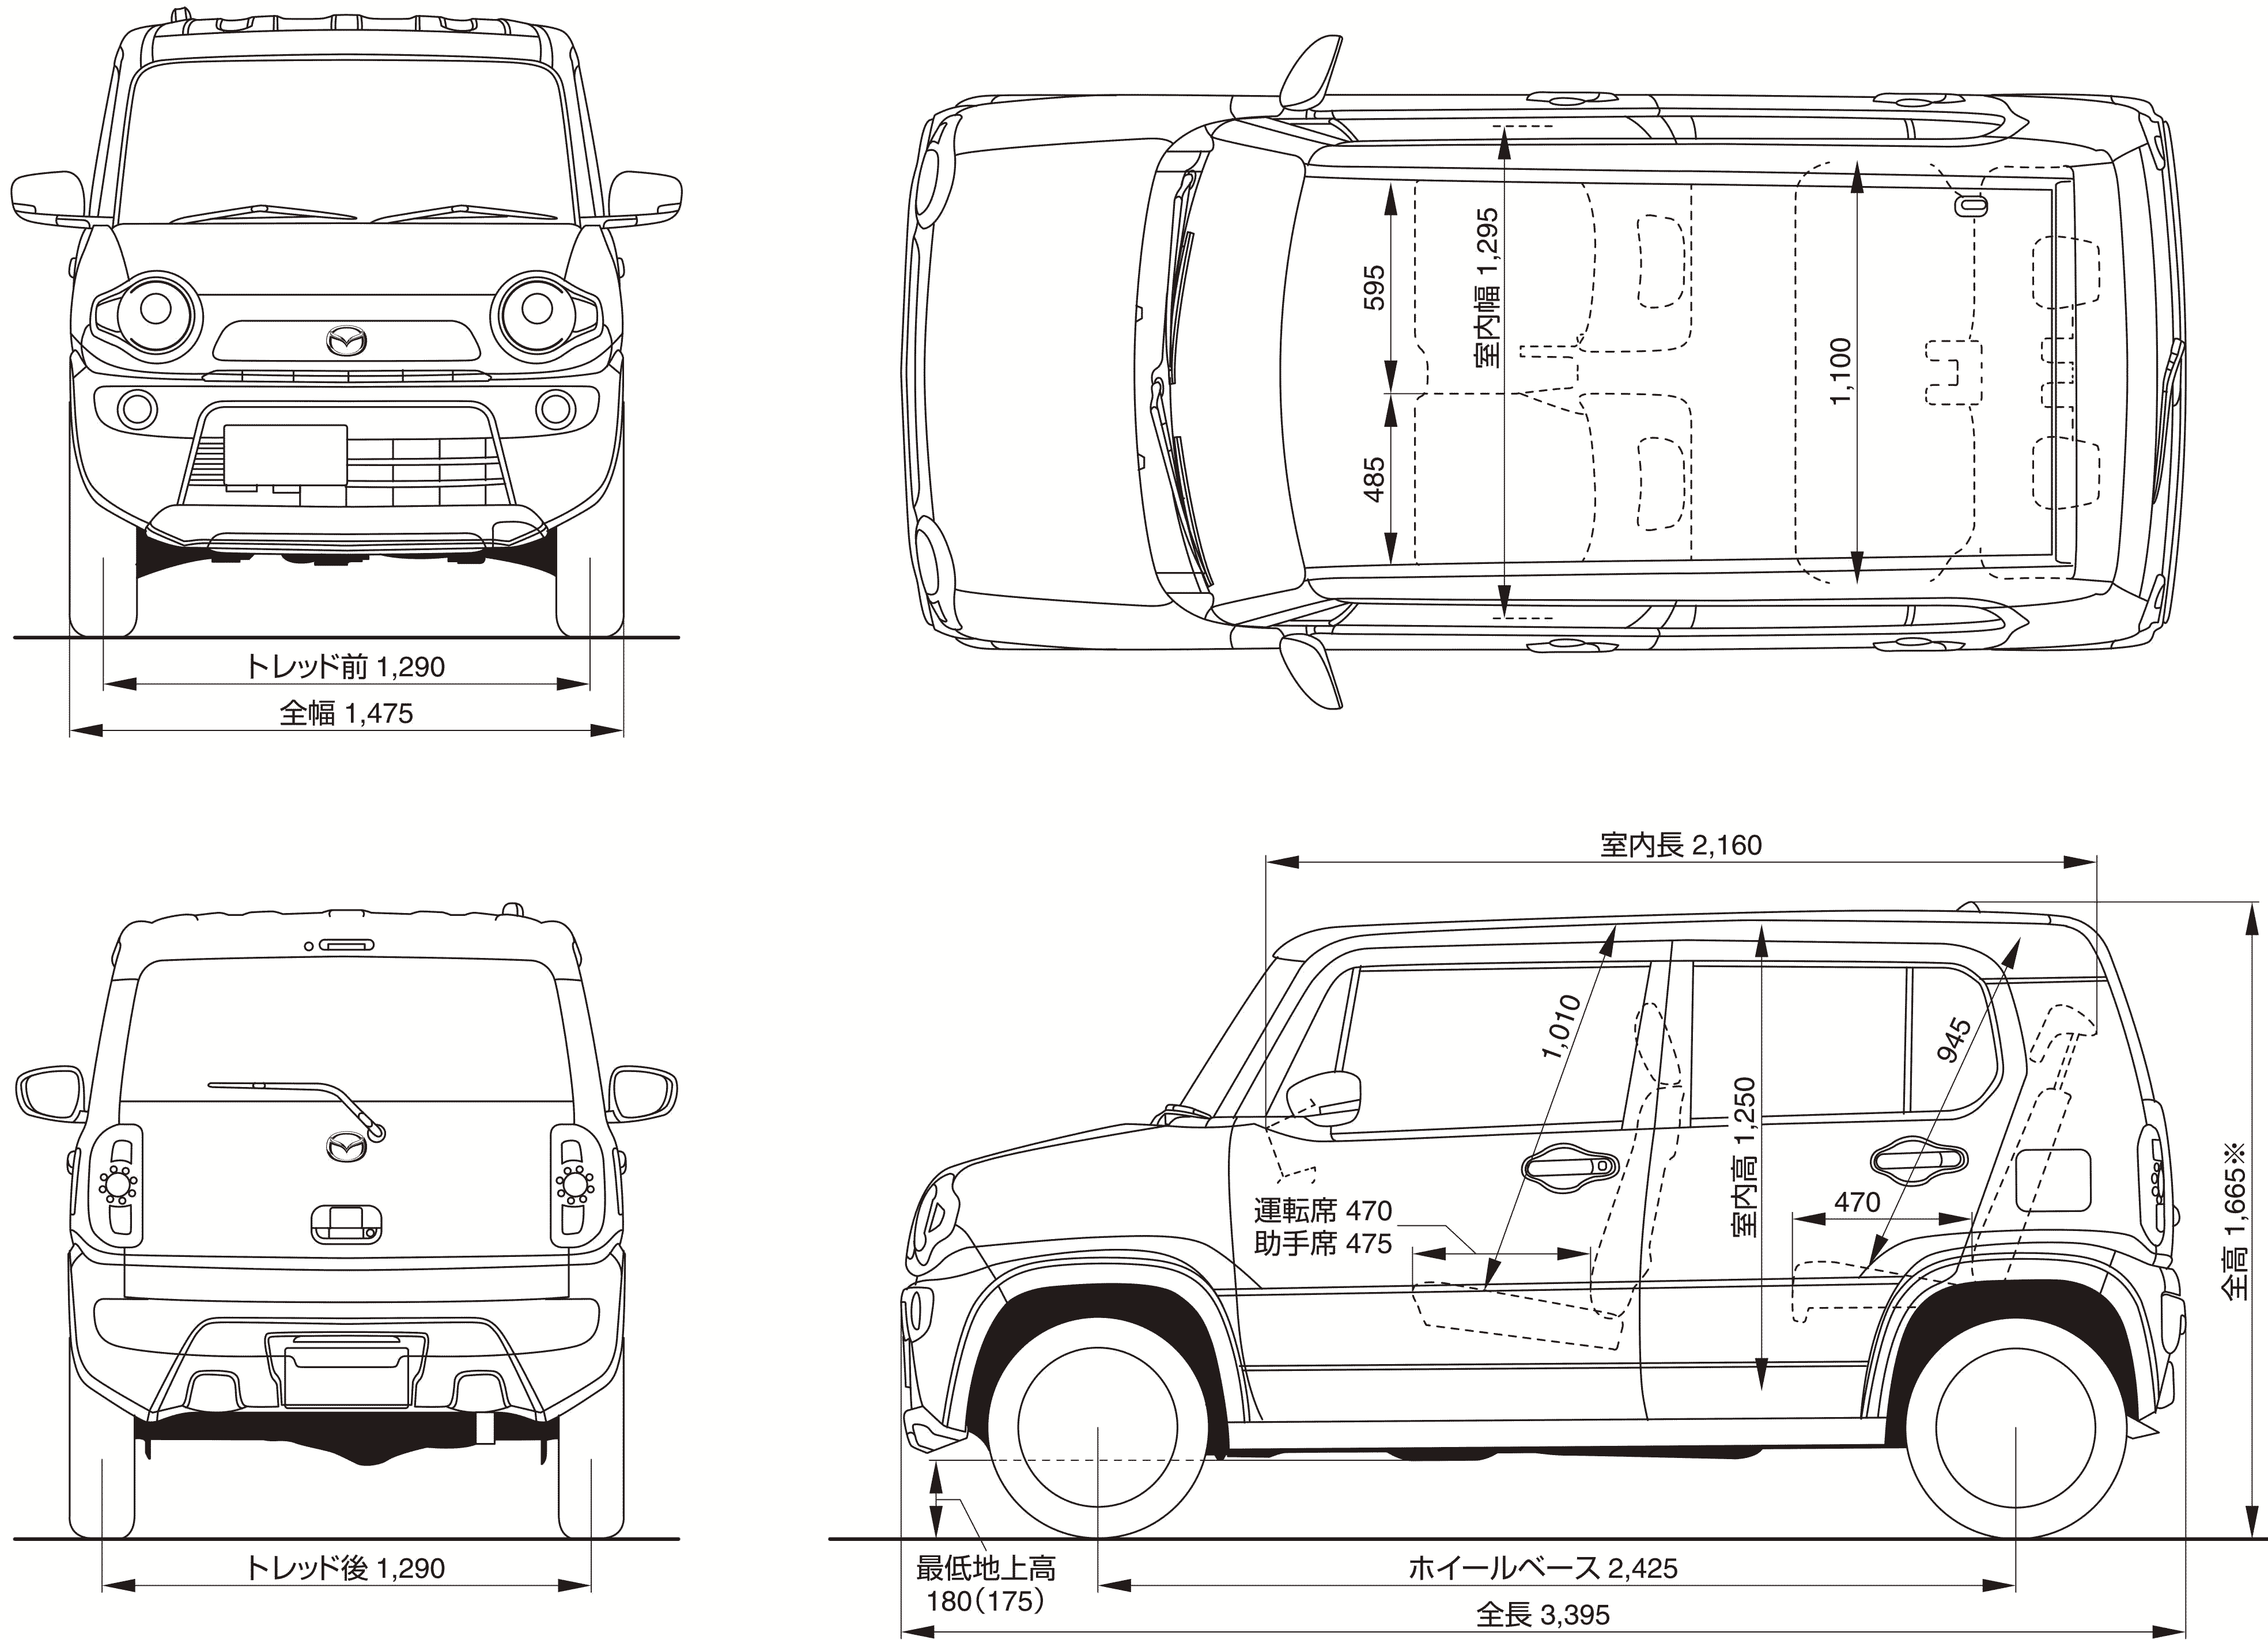 Mazda Flair blueprint